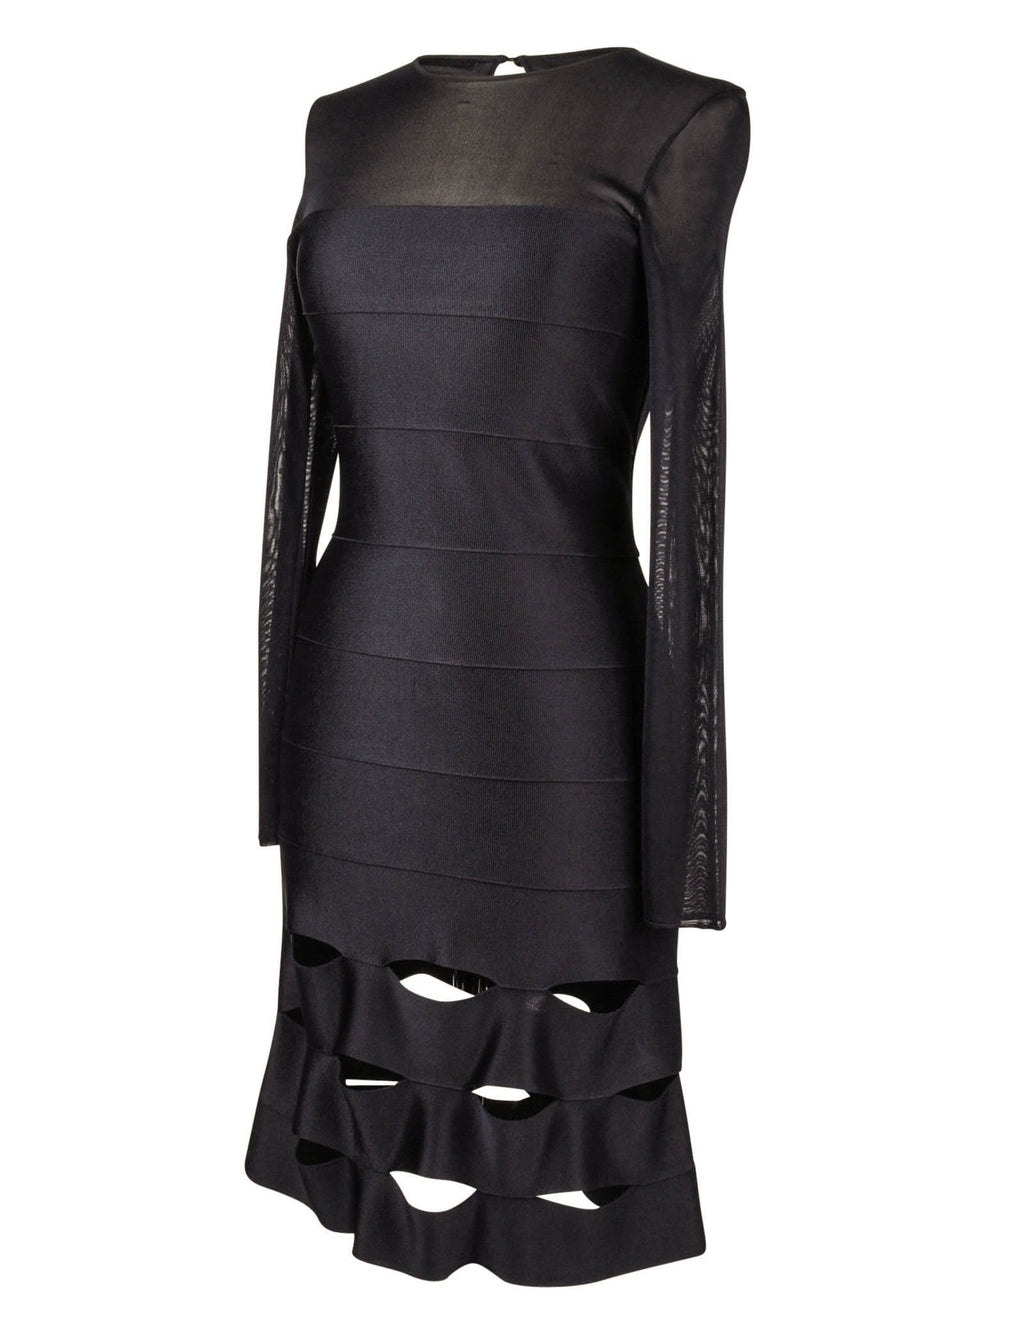 Christian Dior Dress Black Bandage and Mesh 40 / 8 – Mightychic